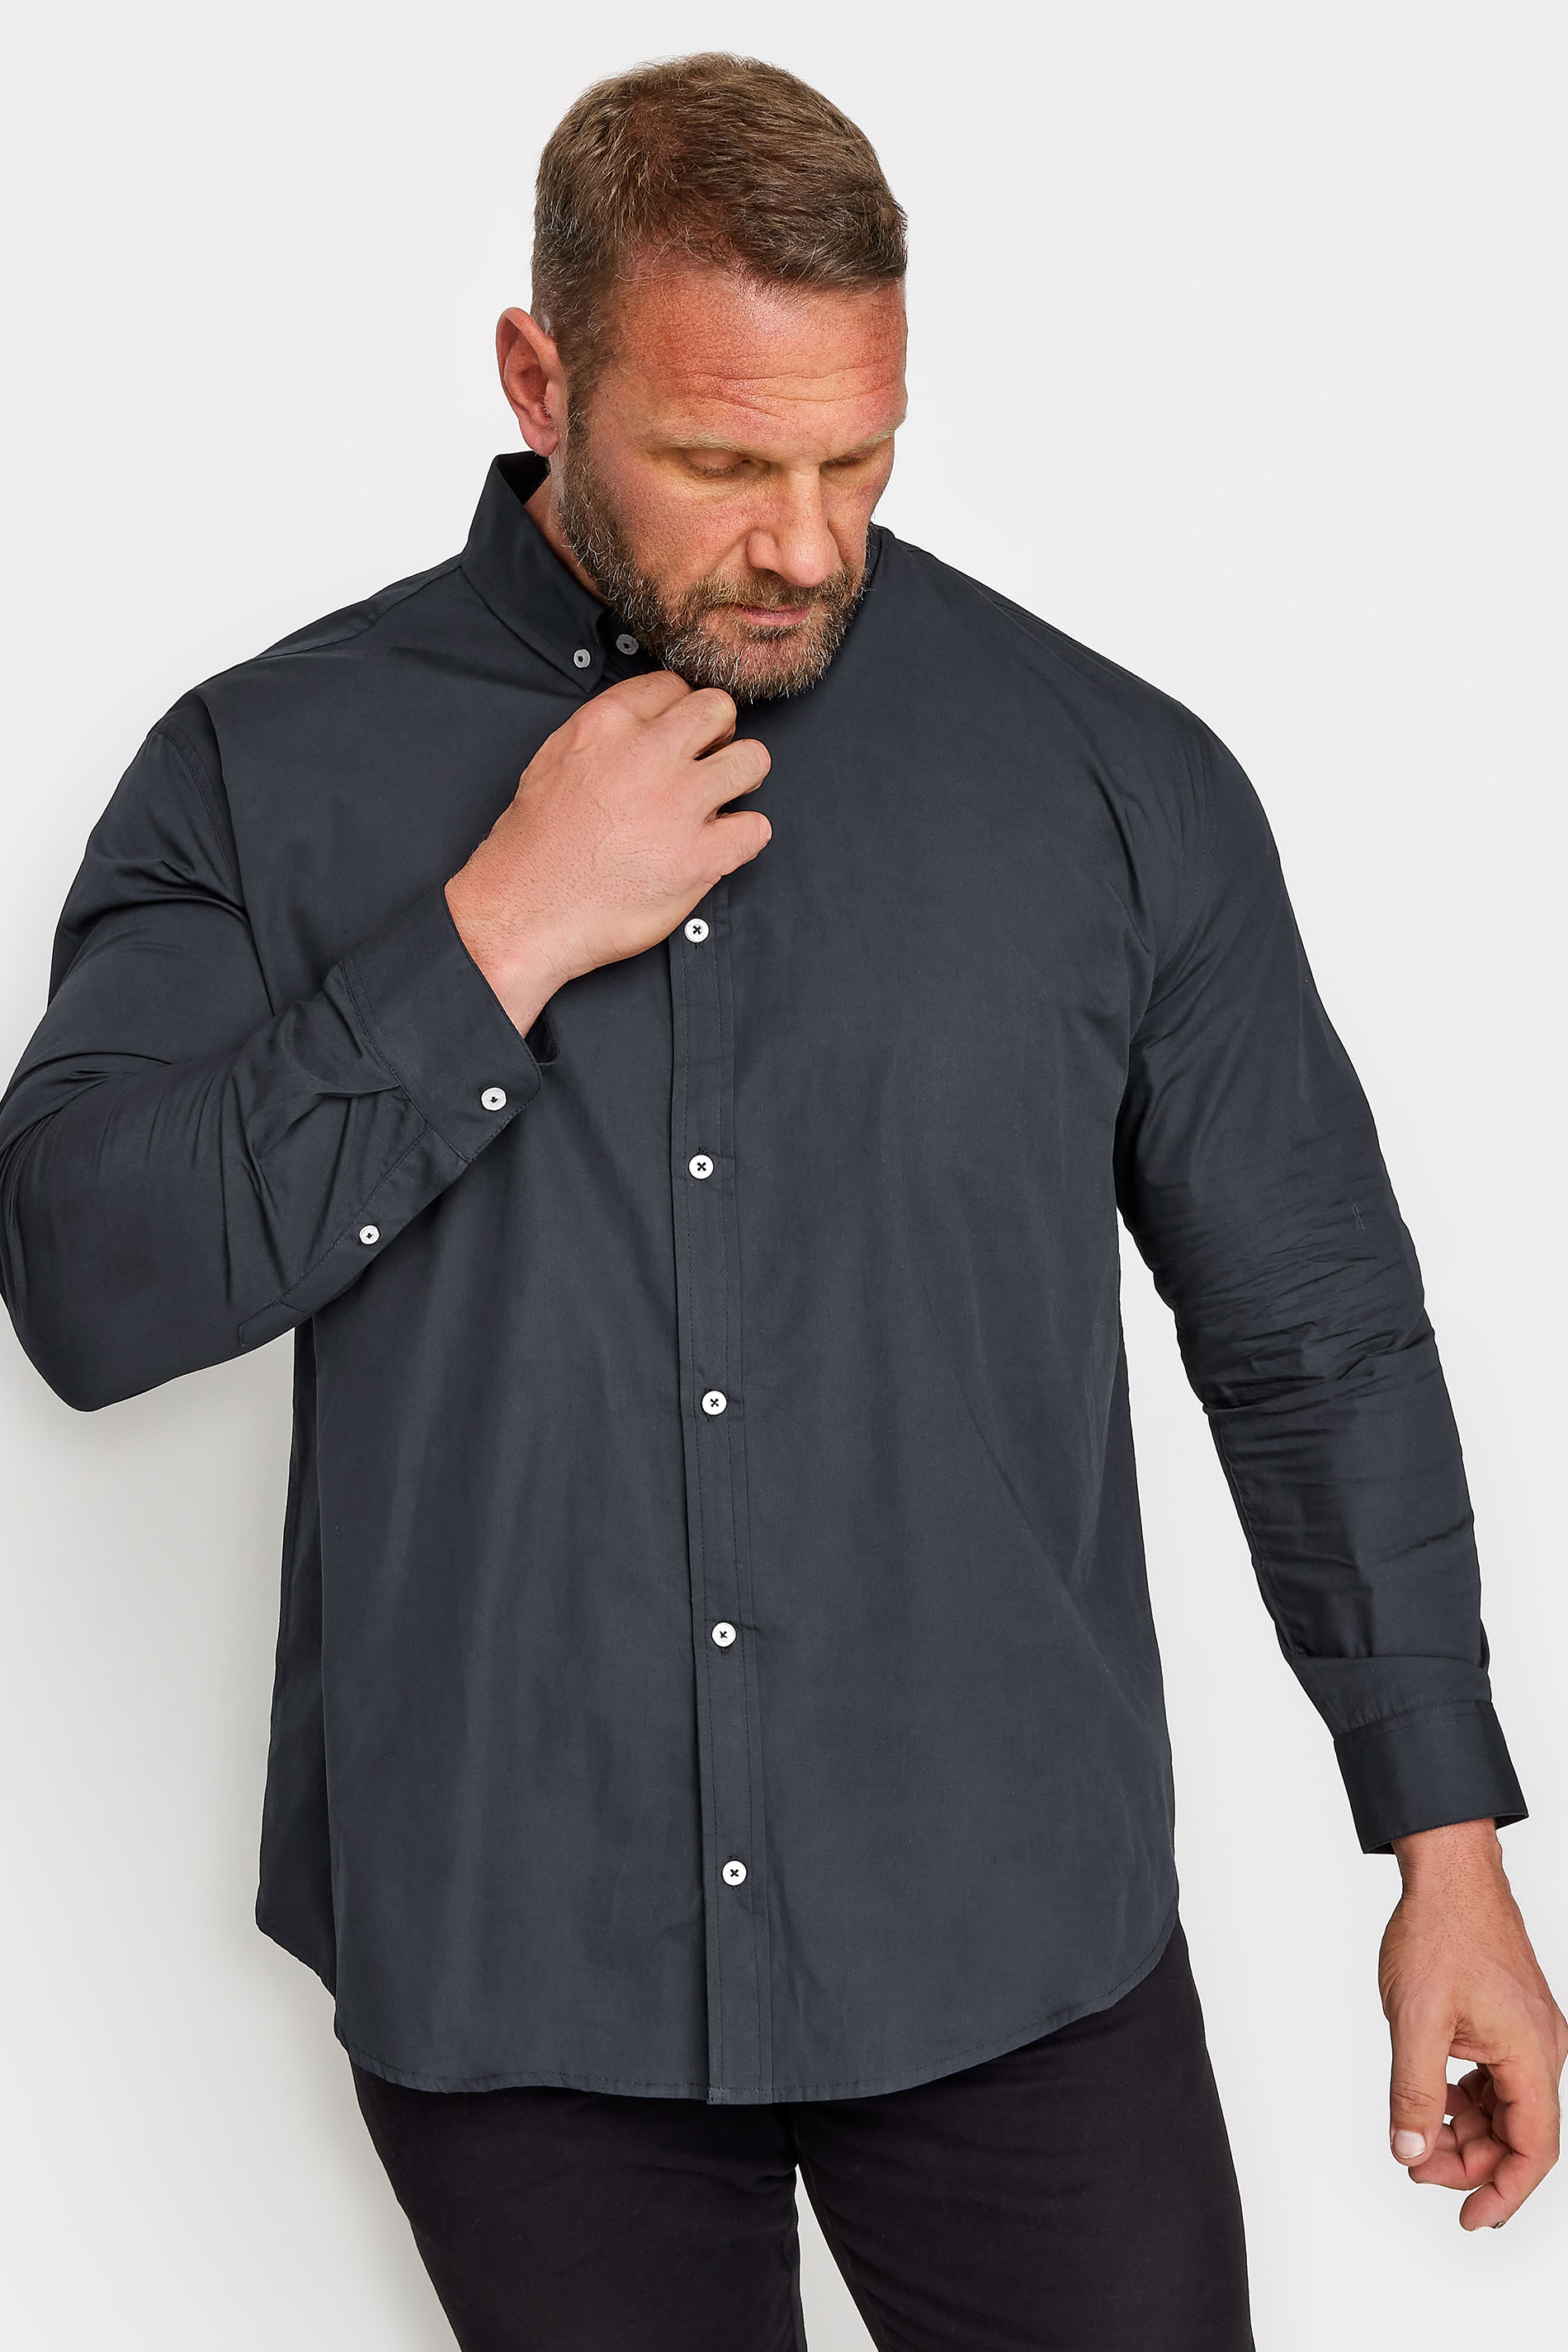 BadRhino Navy Blue Long Sleeve Poplin Shirt | BadRhino